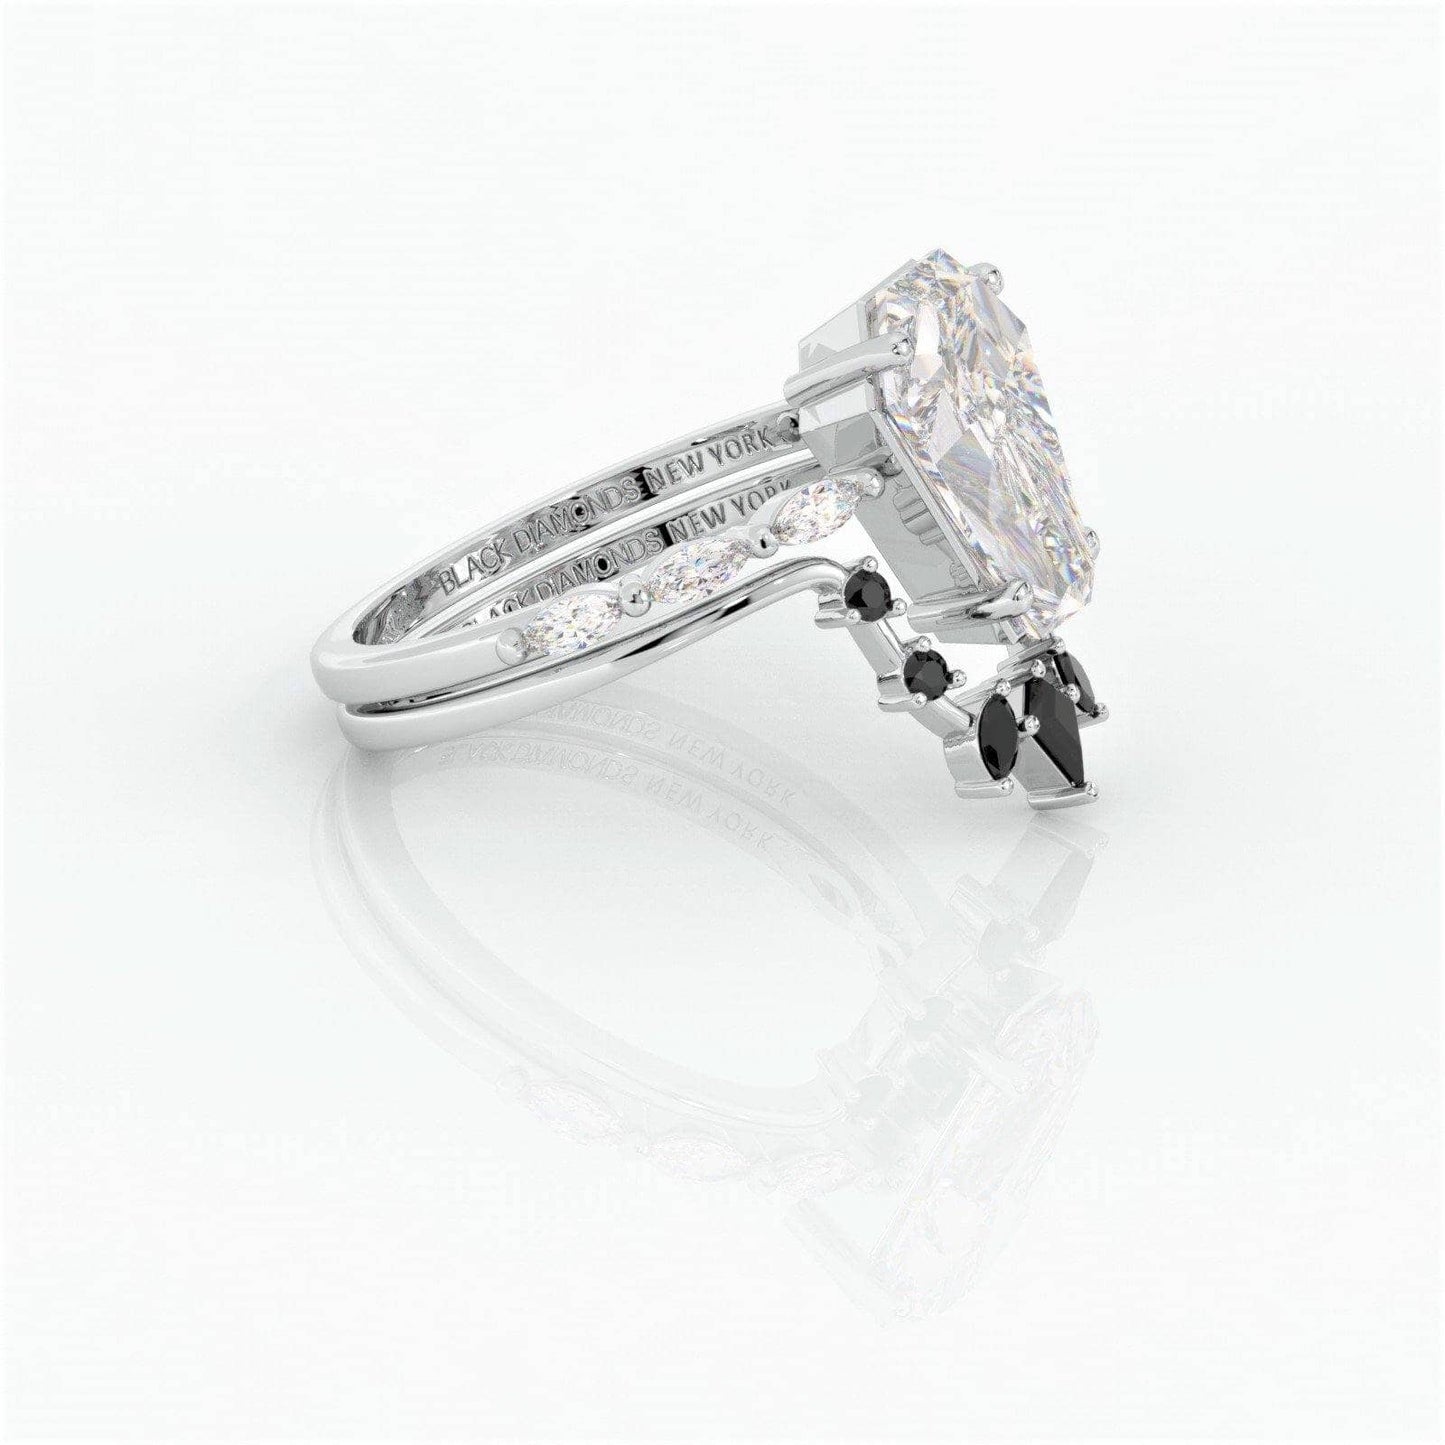 Flash Sale- Devoted To You- Limited Coffin Cut Moissanite Diamond Gothic Ring Set-Black Diamonds New York